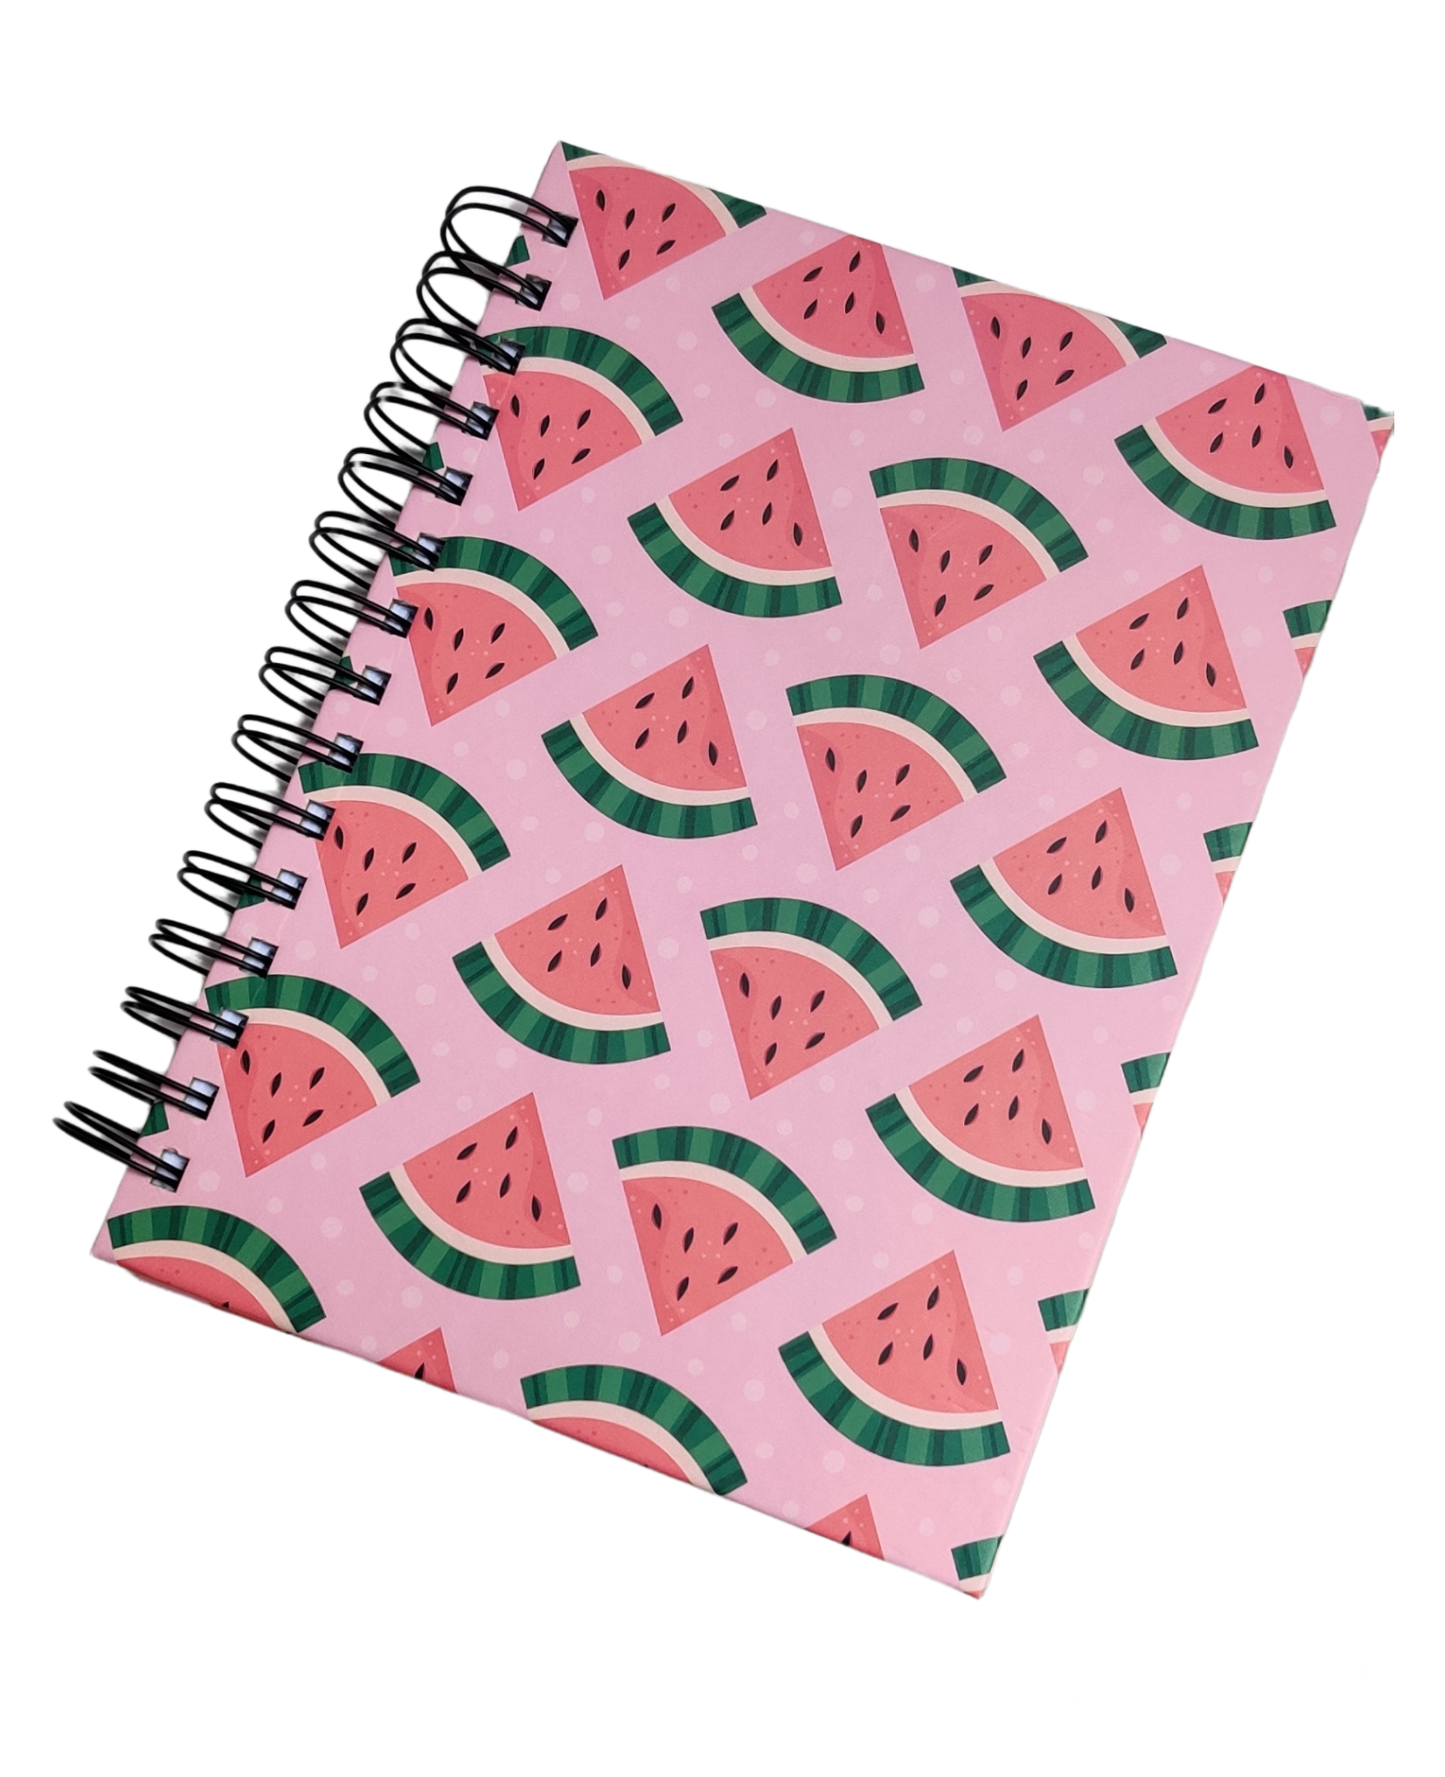 Watermelon Spiral Journal/Notepad - The Umbrella store